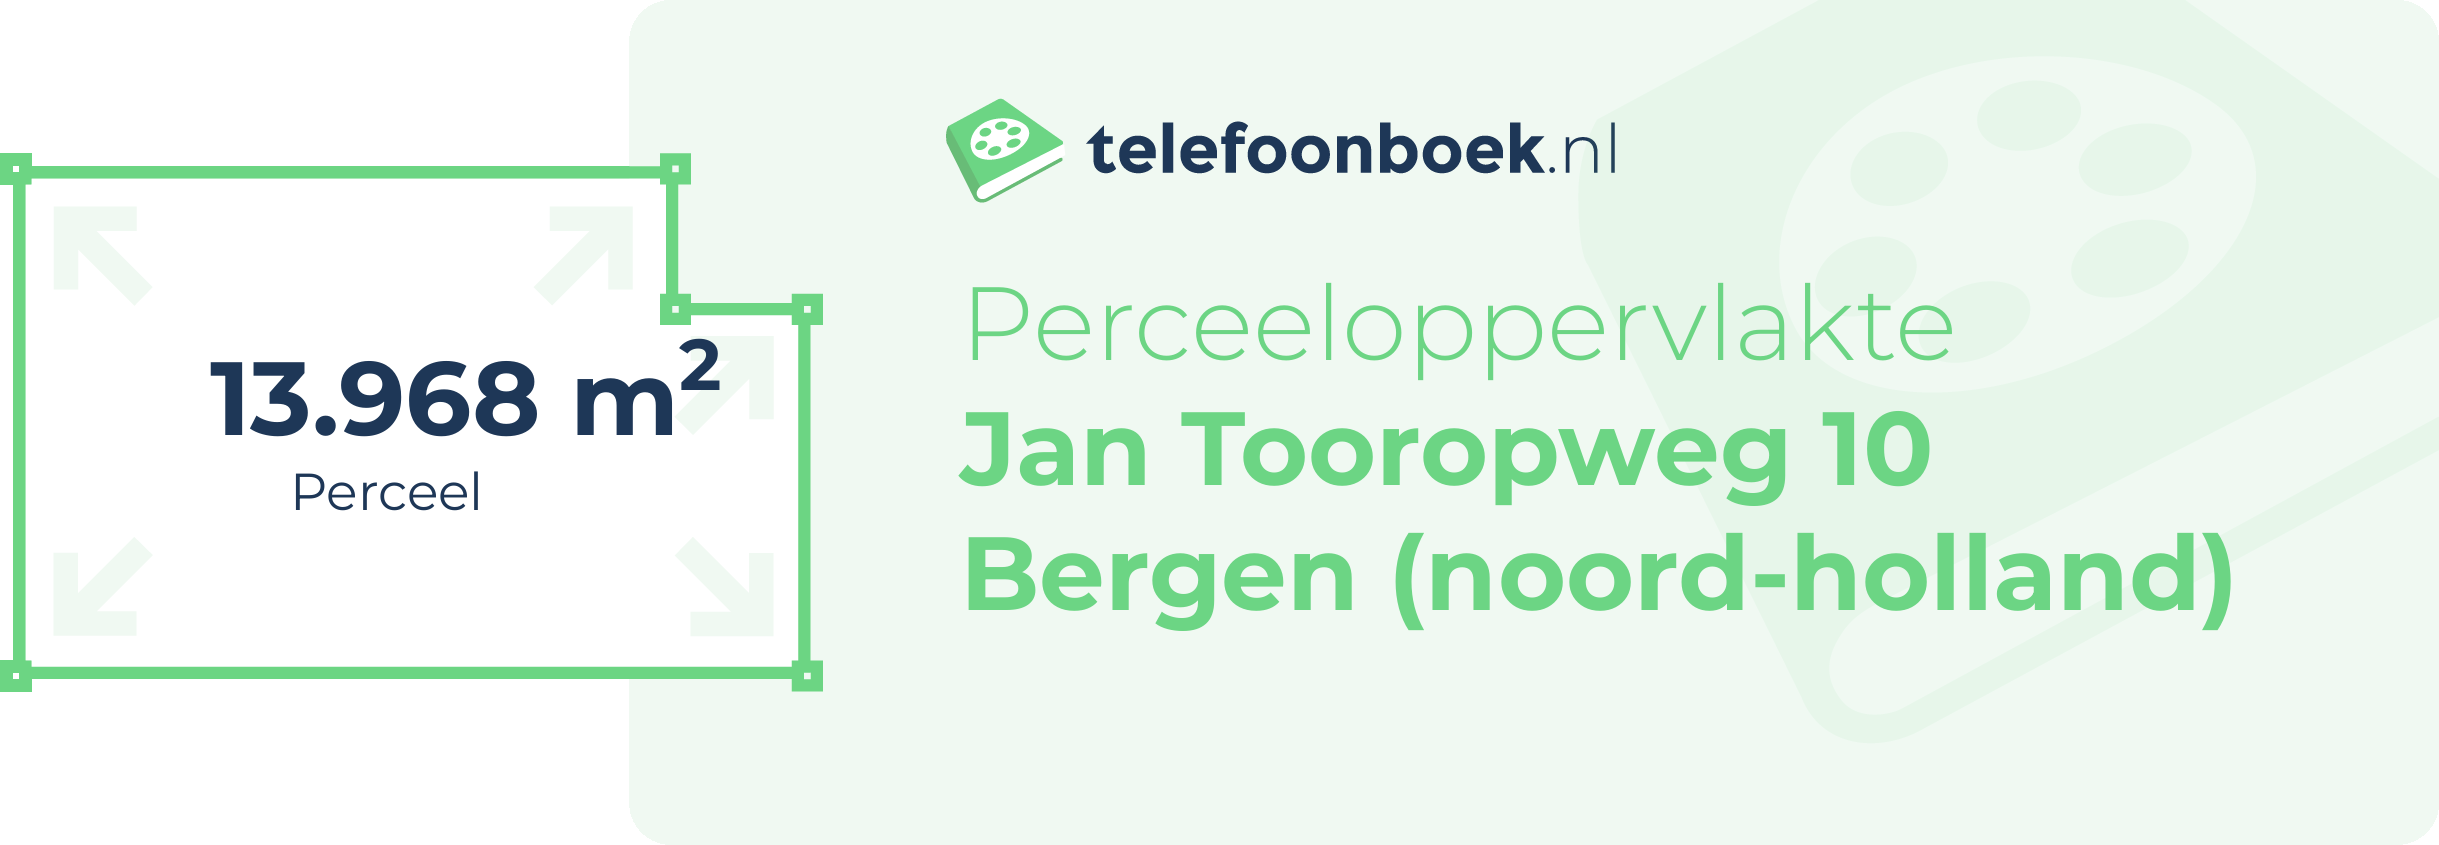 Perceeloppervlakte Jan Tooropweg 10 Bergen (Noord-Holland)